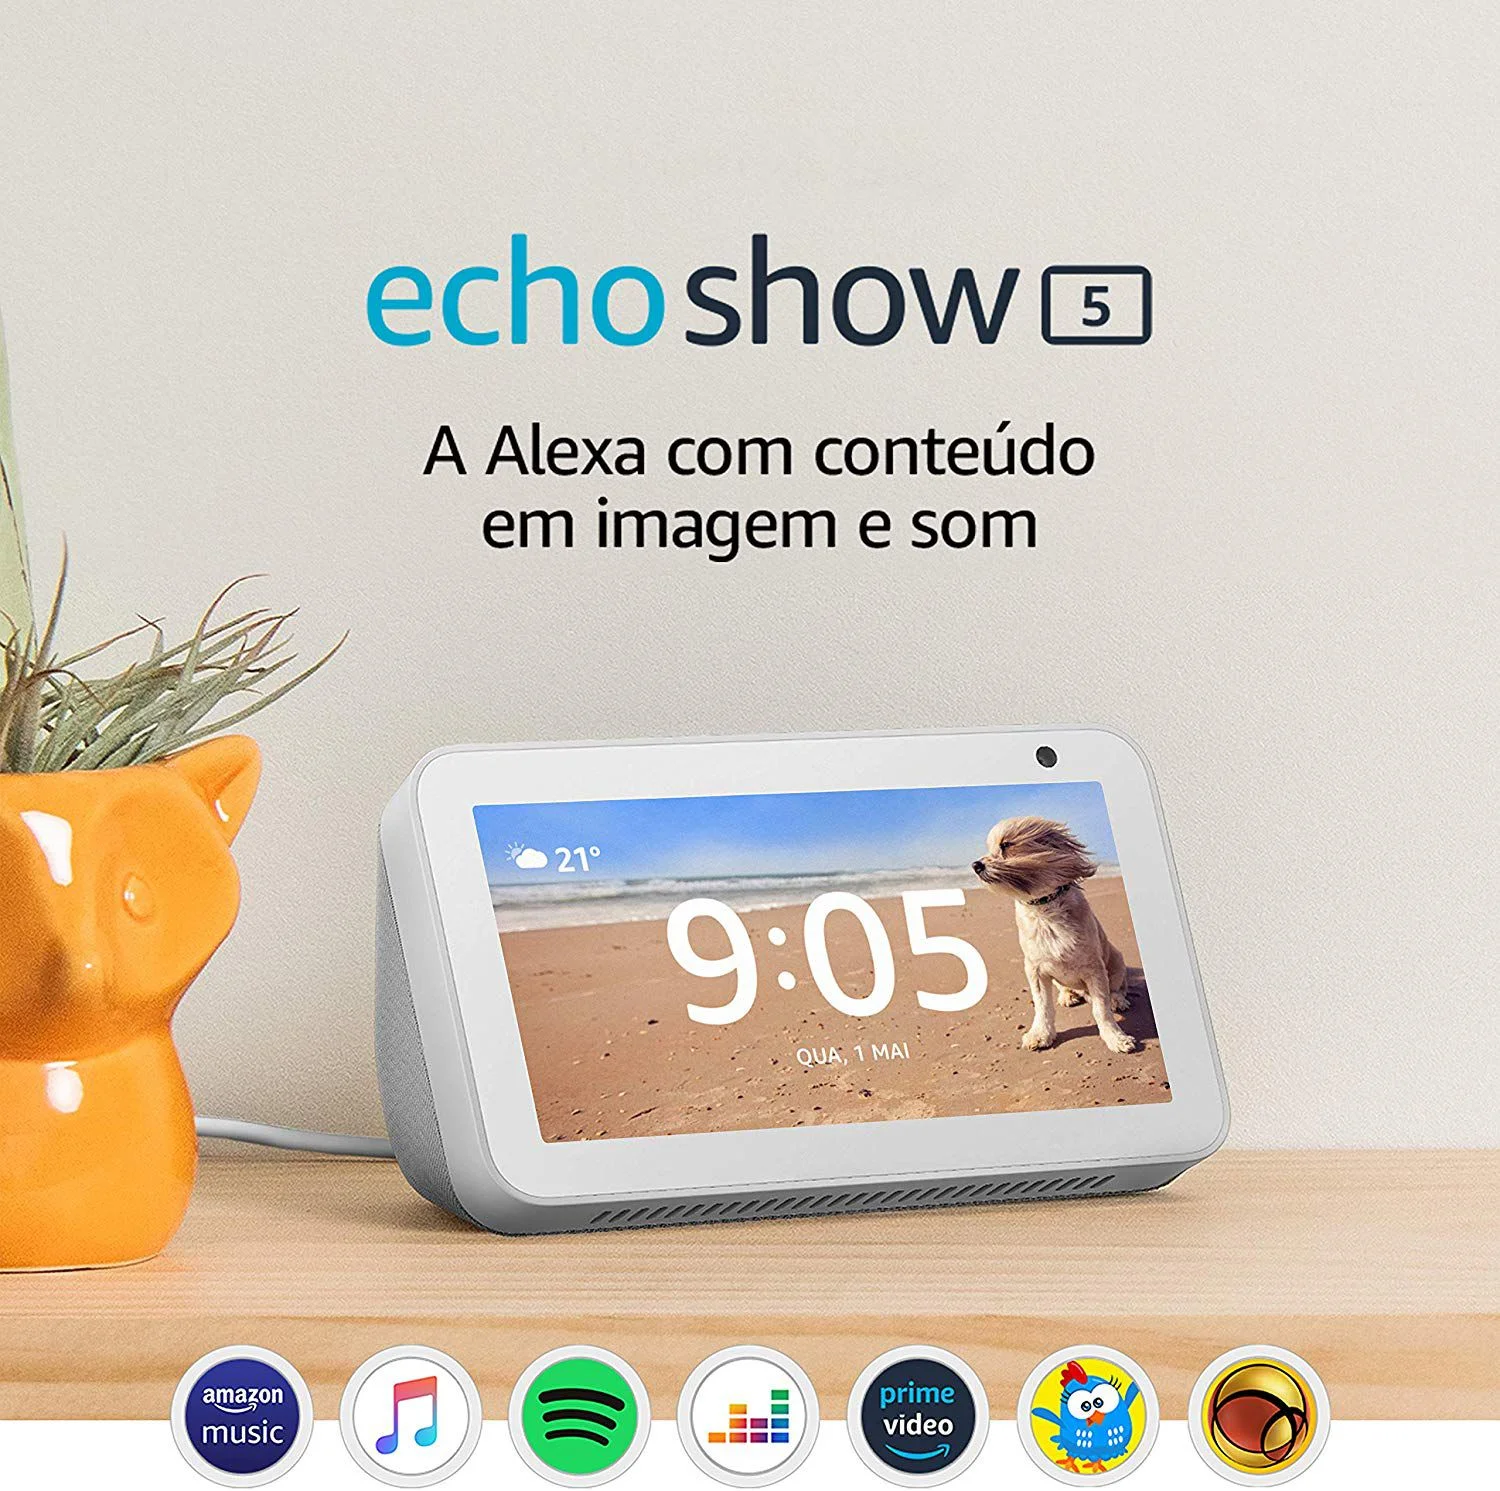 Echo show 5 